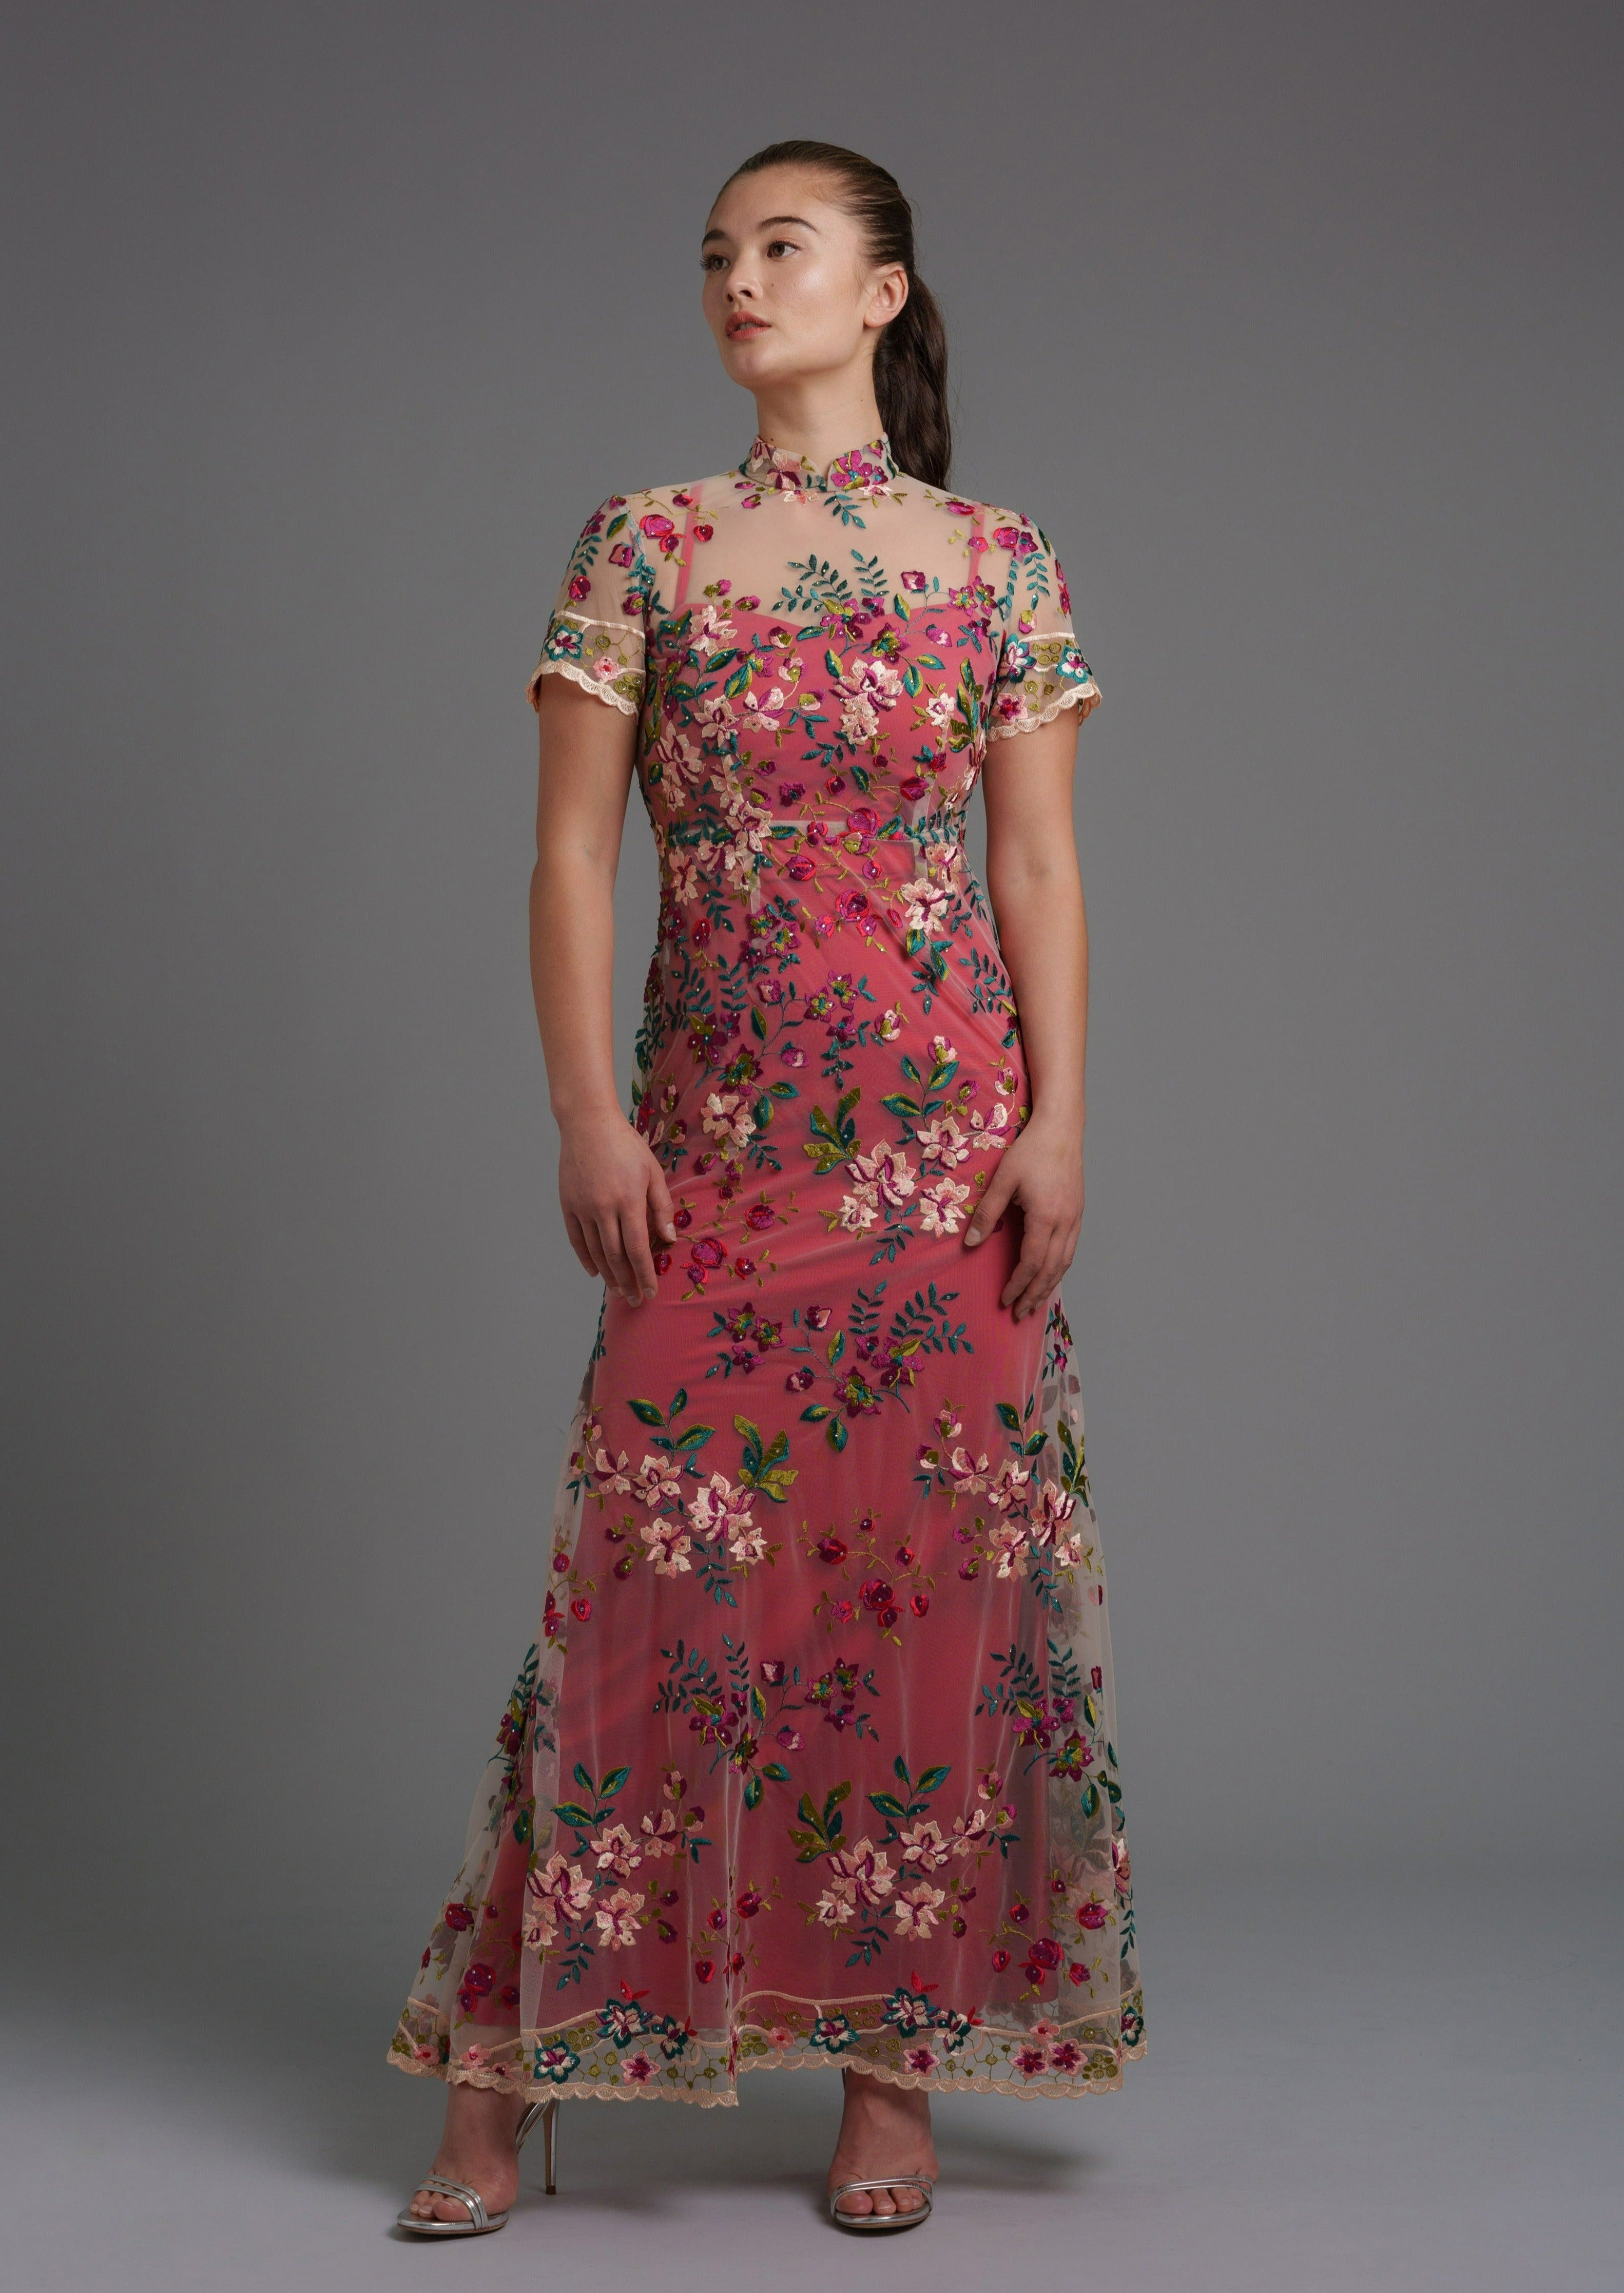 Lotus Short Sleeves Qipao Gown